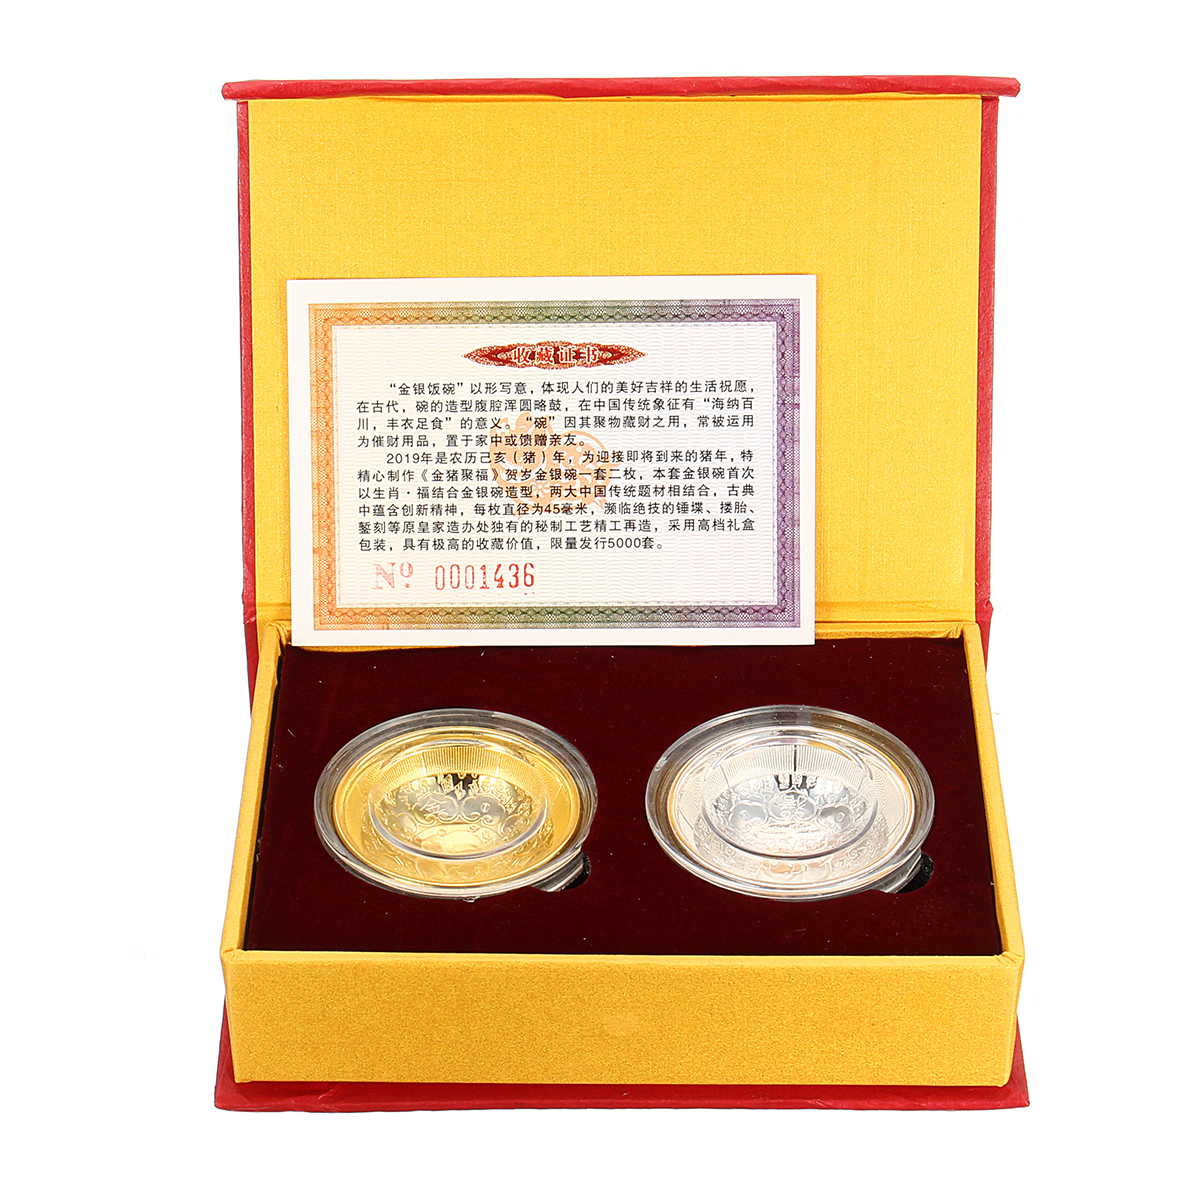 

2Pcs China Year Of Pig Bowls Cartoon Animal Gold/Silver Memorial Collection Gift Decorations